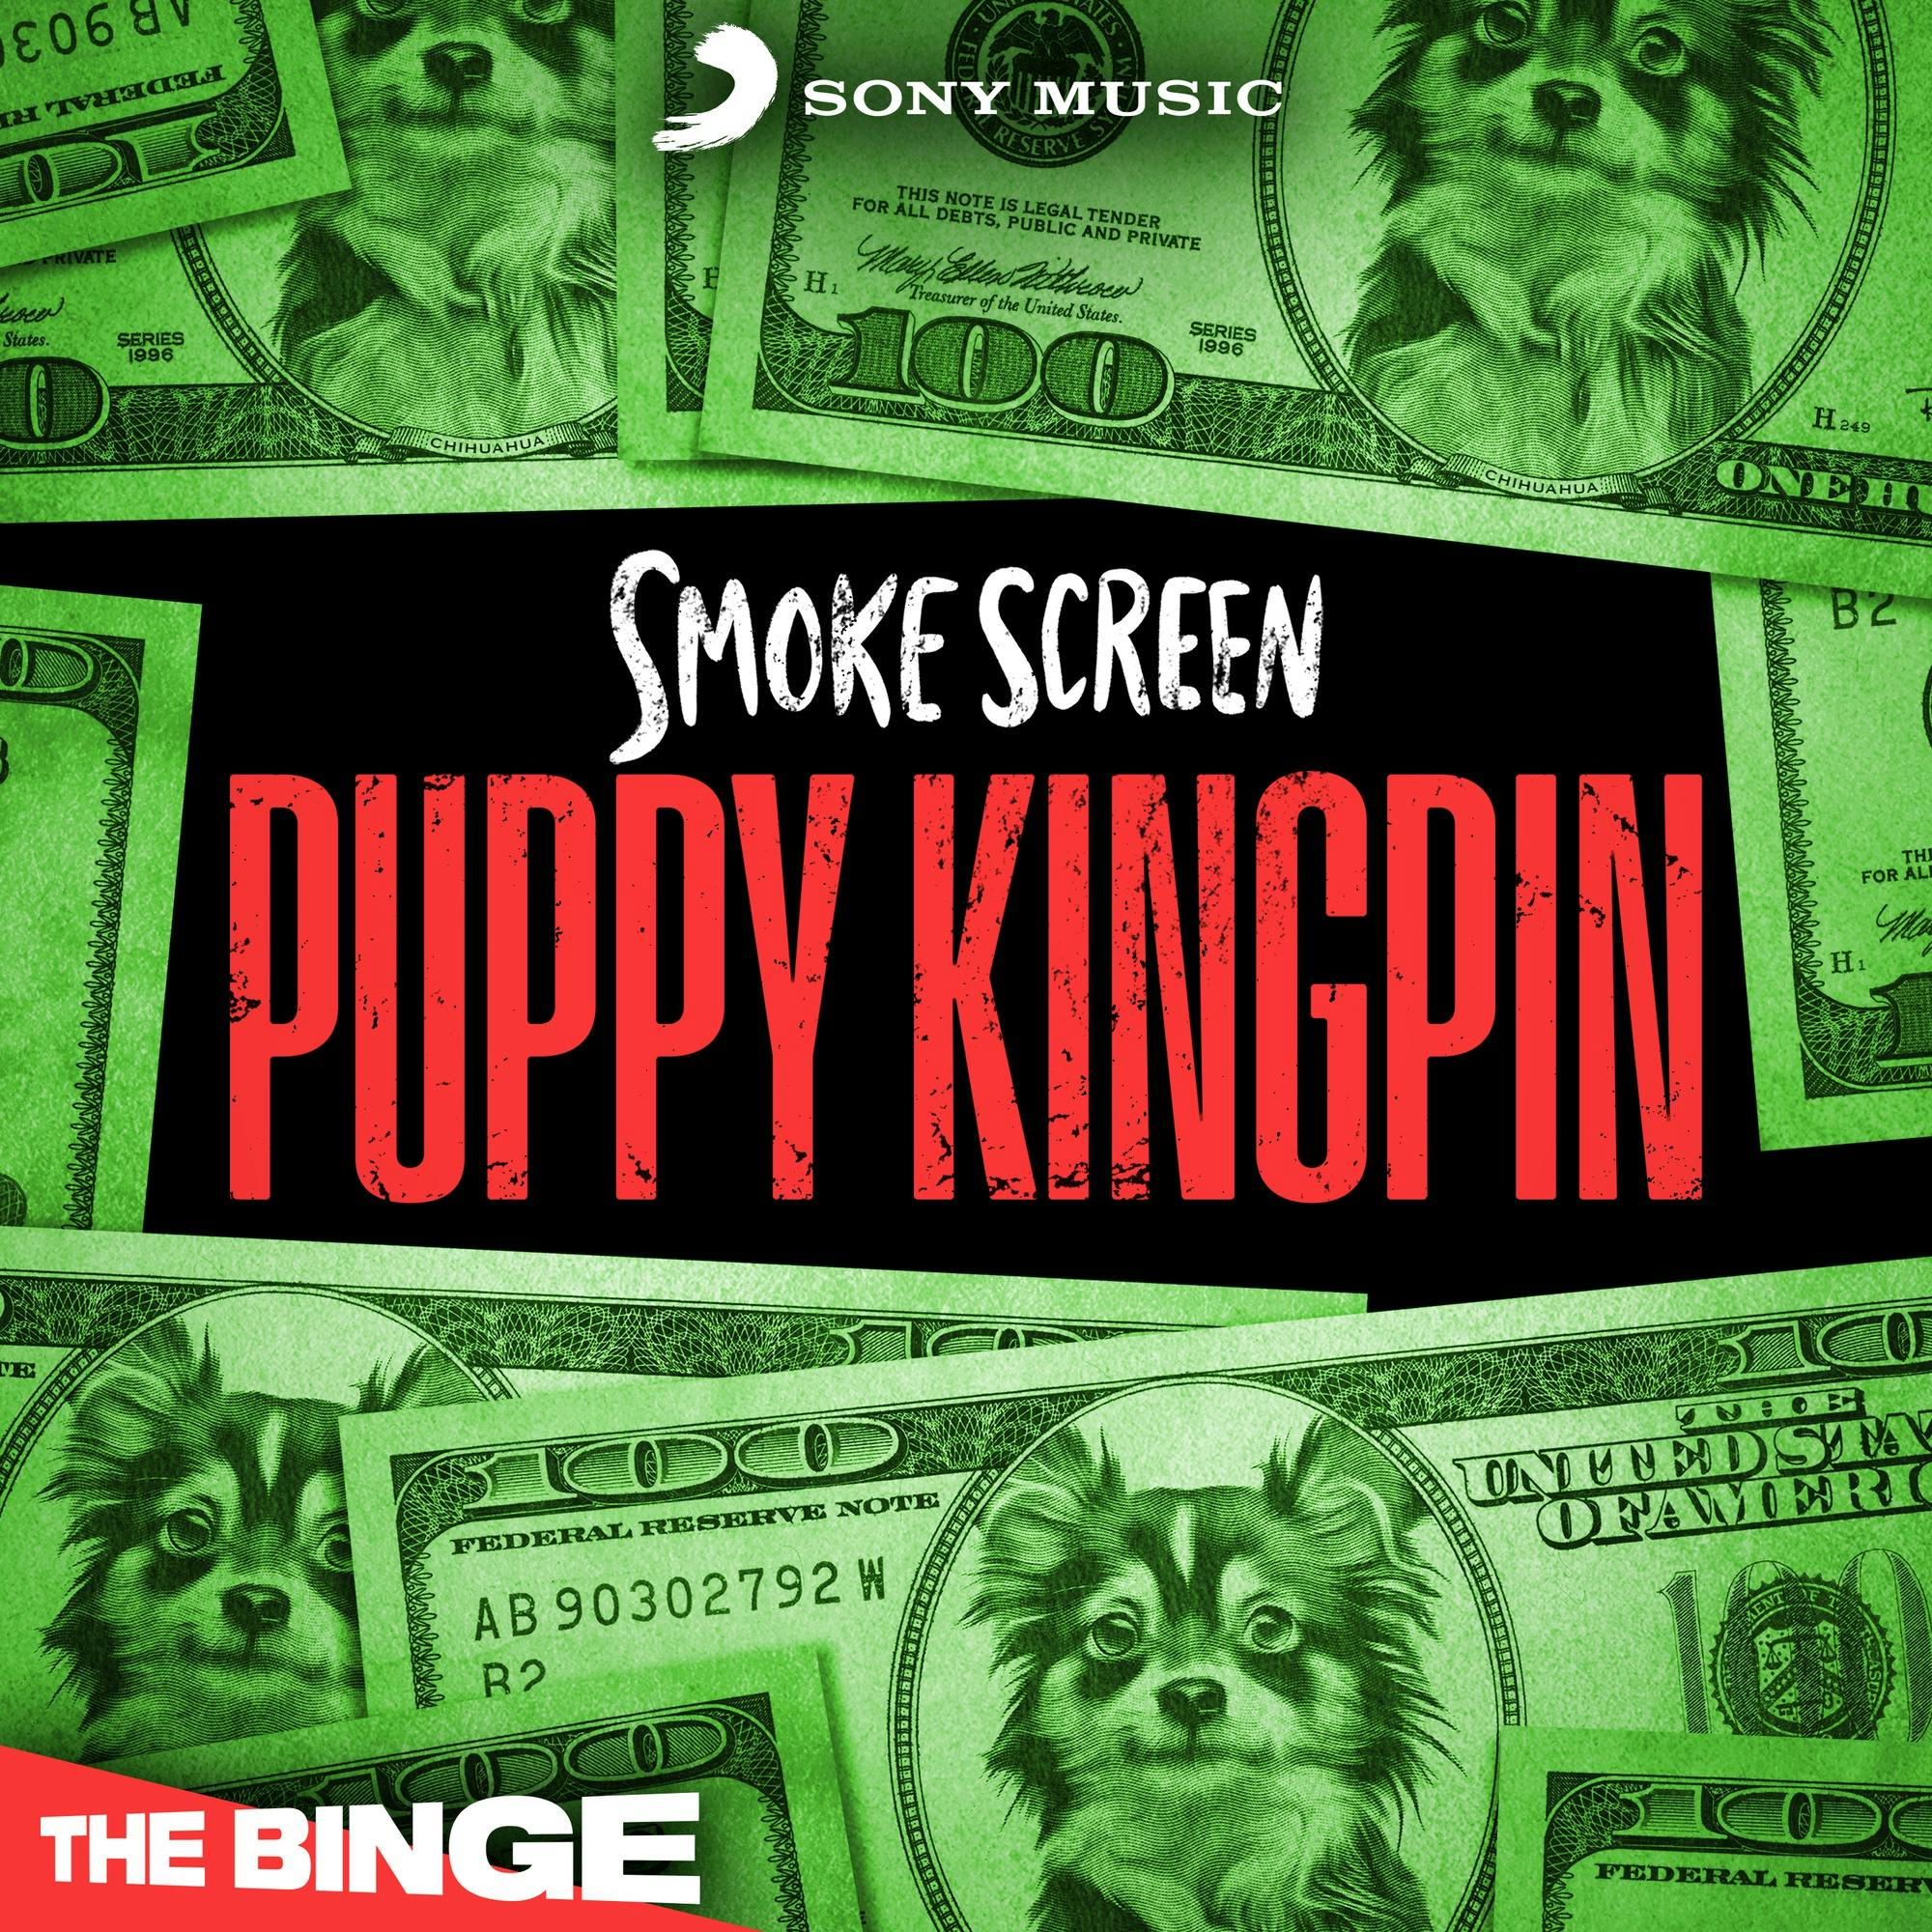 Coming Soon: Puppy Kingpin